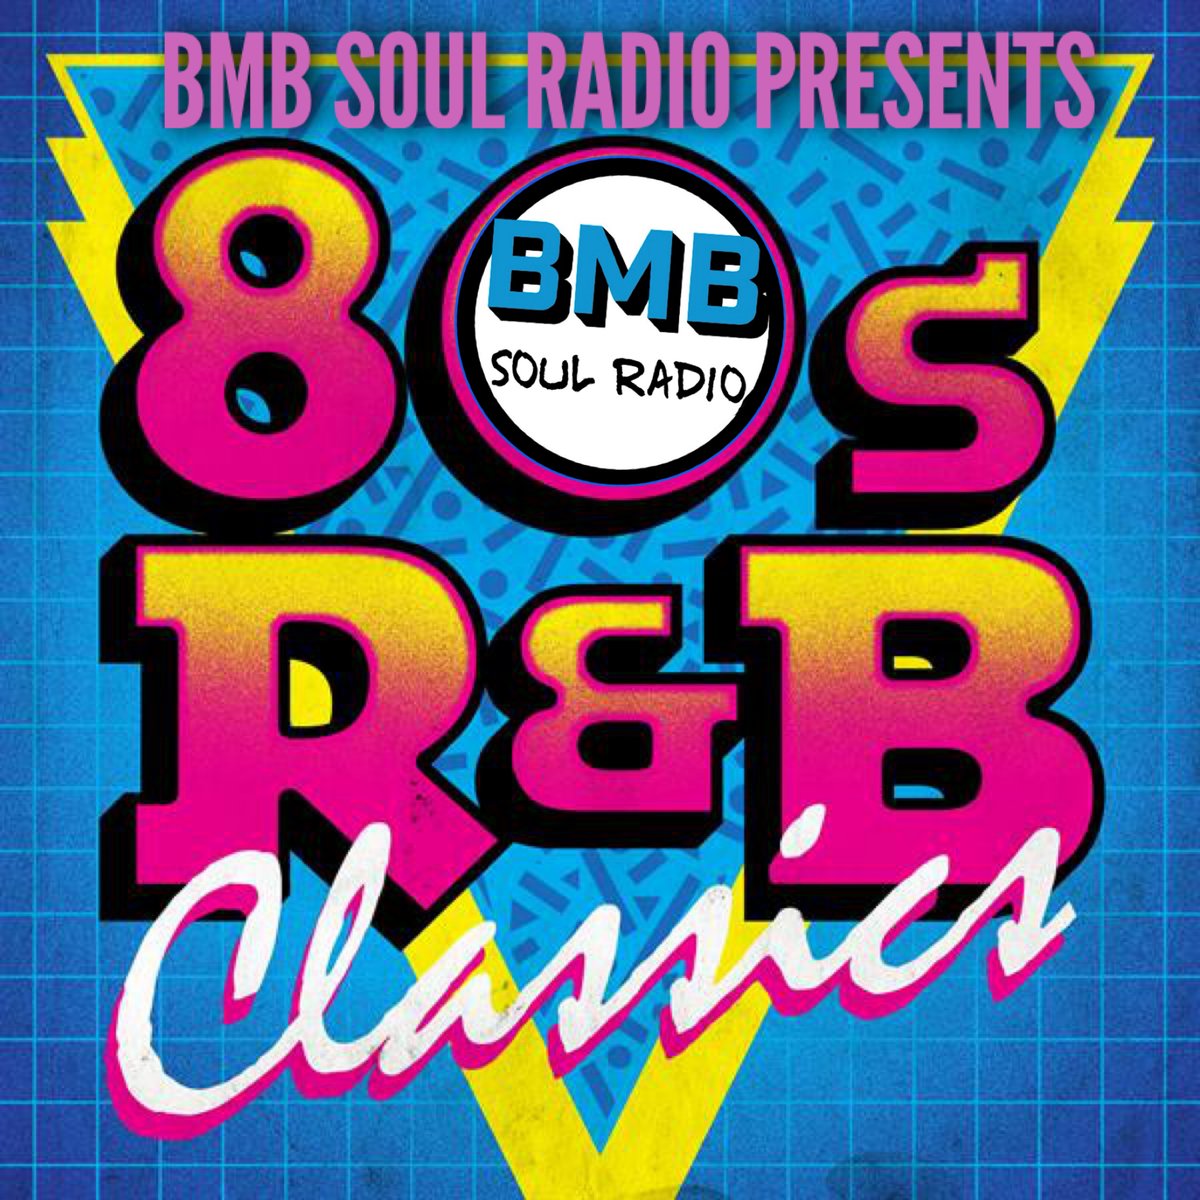 #NowPlaying On BMB Soul Radio 365   
> Old School 80s R&B Mix
Bmbempower.com #music #olschool #newjackswing #rnb #gospel #smoothjazz #funk #hiphop #oldschool
>Website: bmbempower.com
»Live 365: live365.com/station/a65425
»TuneIn: tun.in/sfFj8